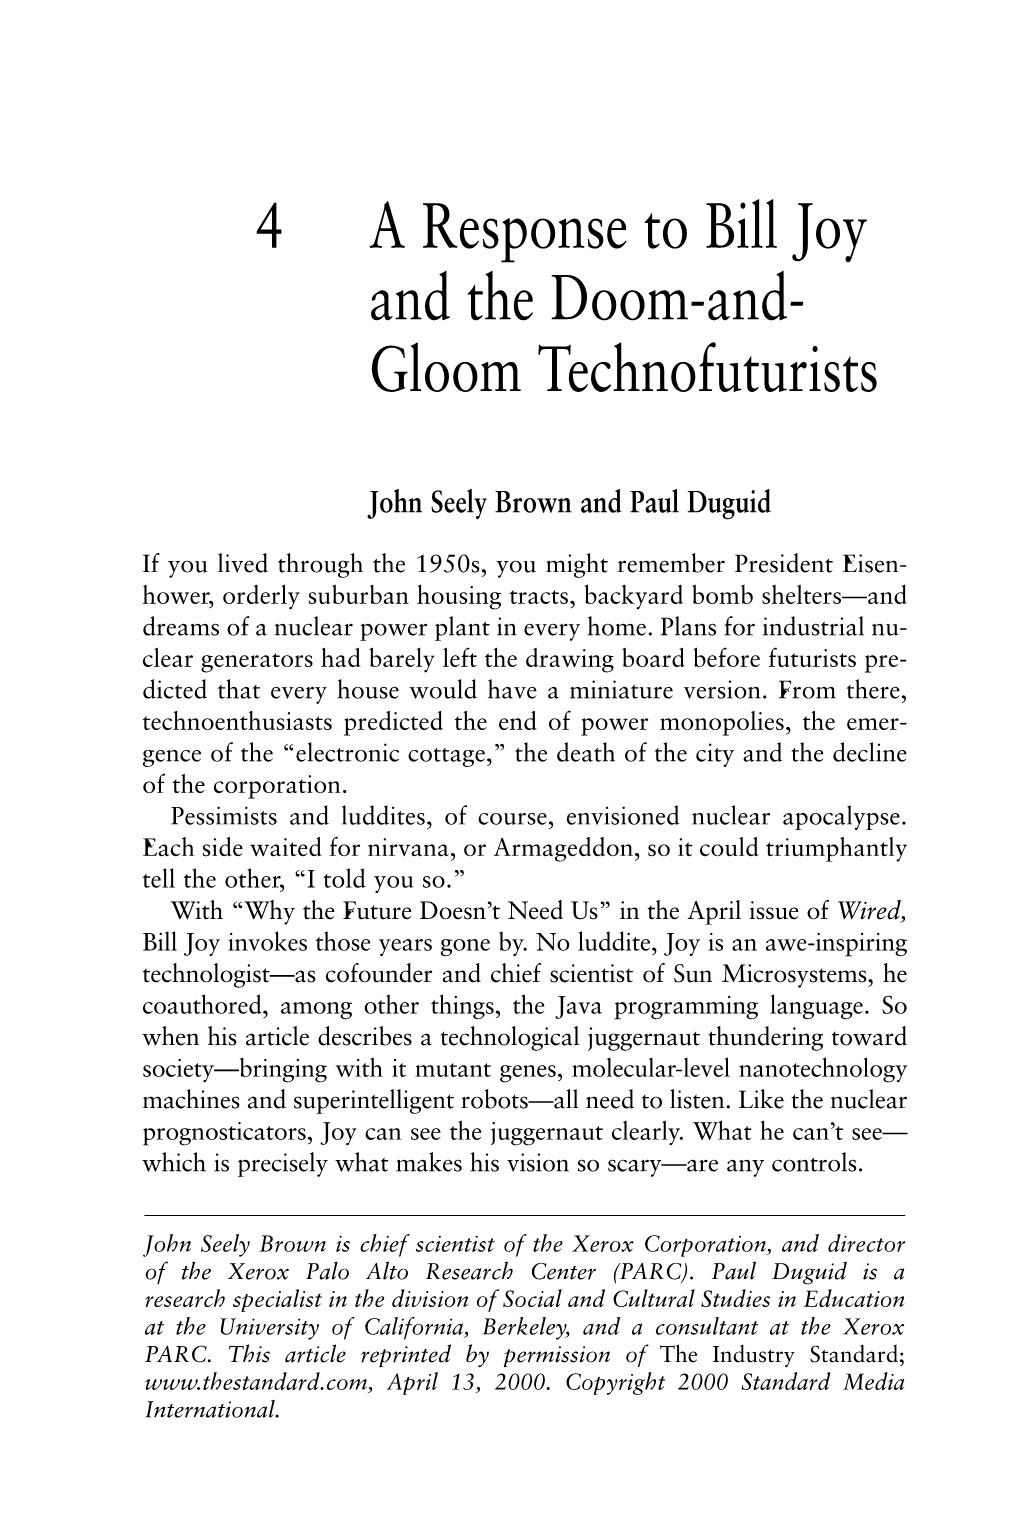 4 a Response to Bill Joy and the Doom-And- Gloom Technofuturists